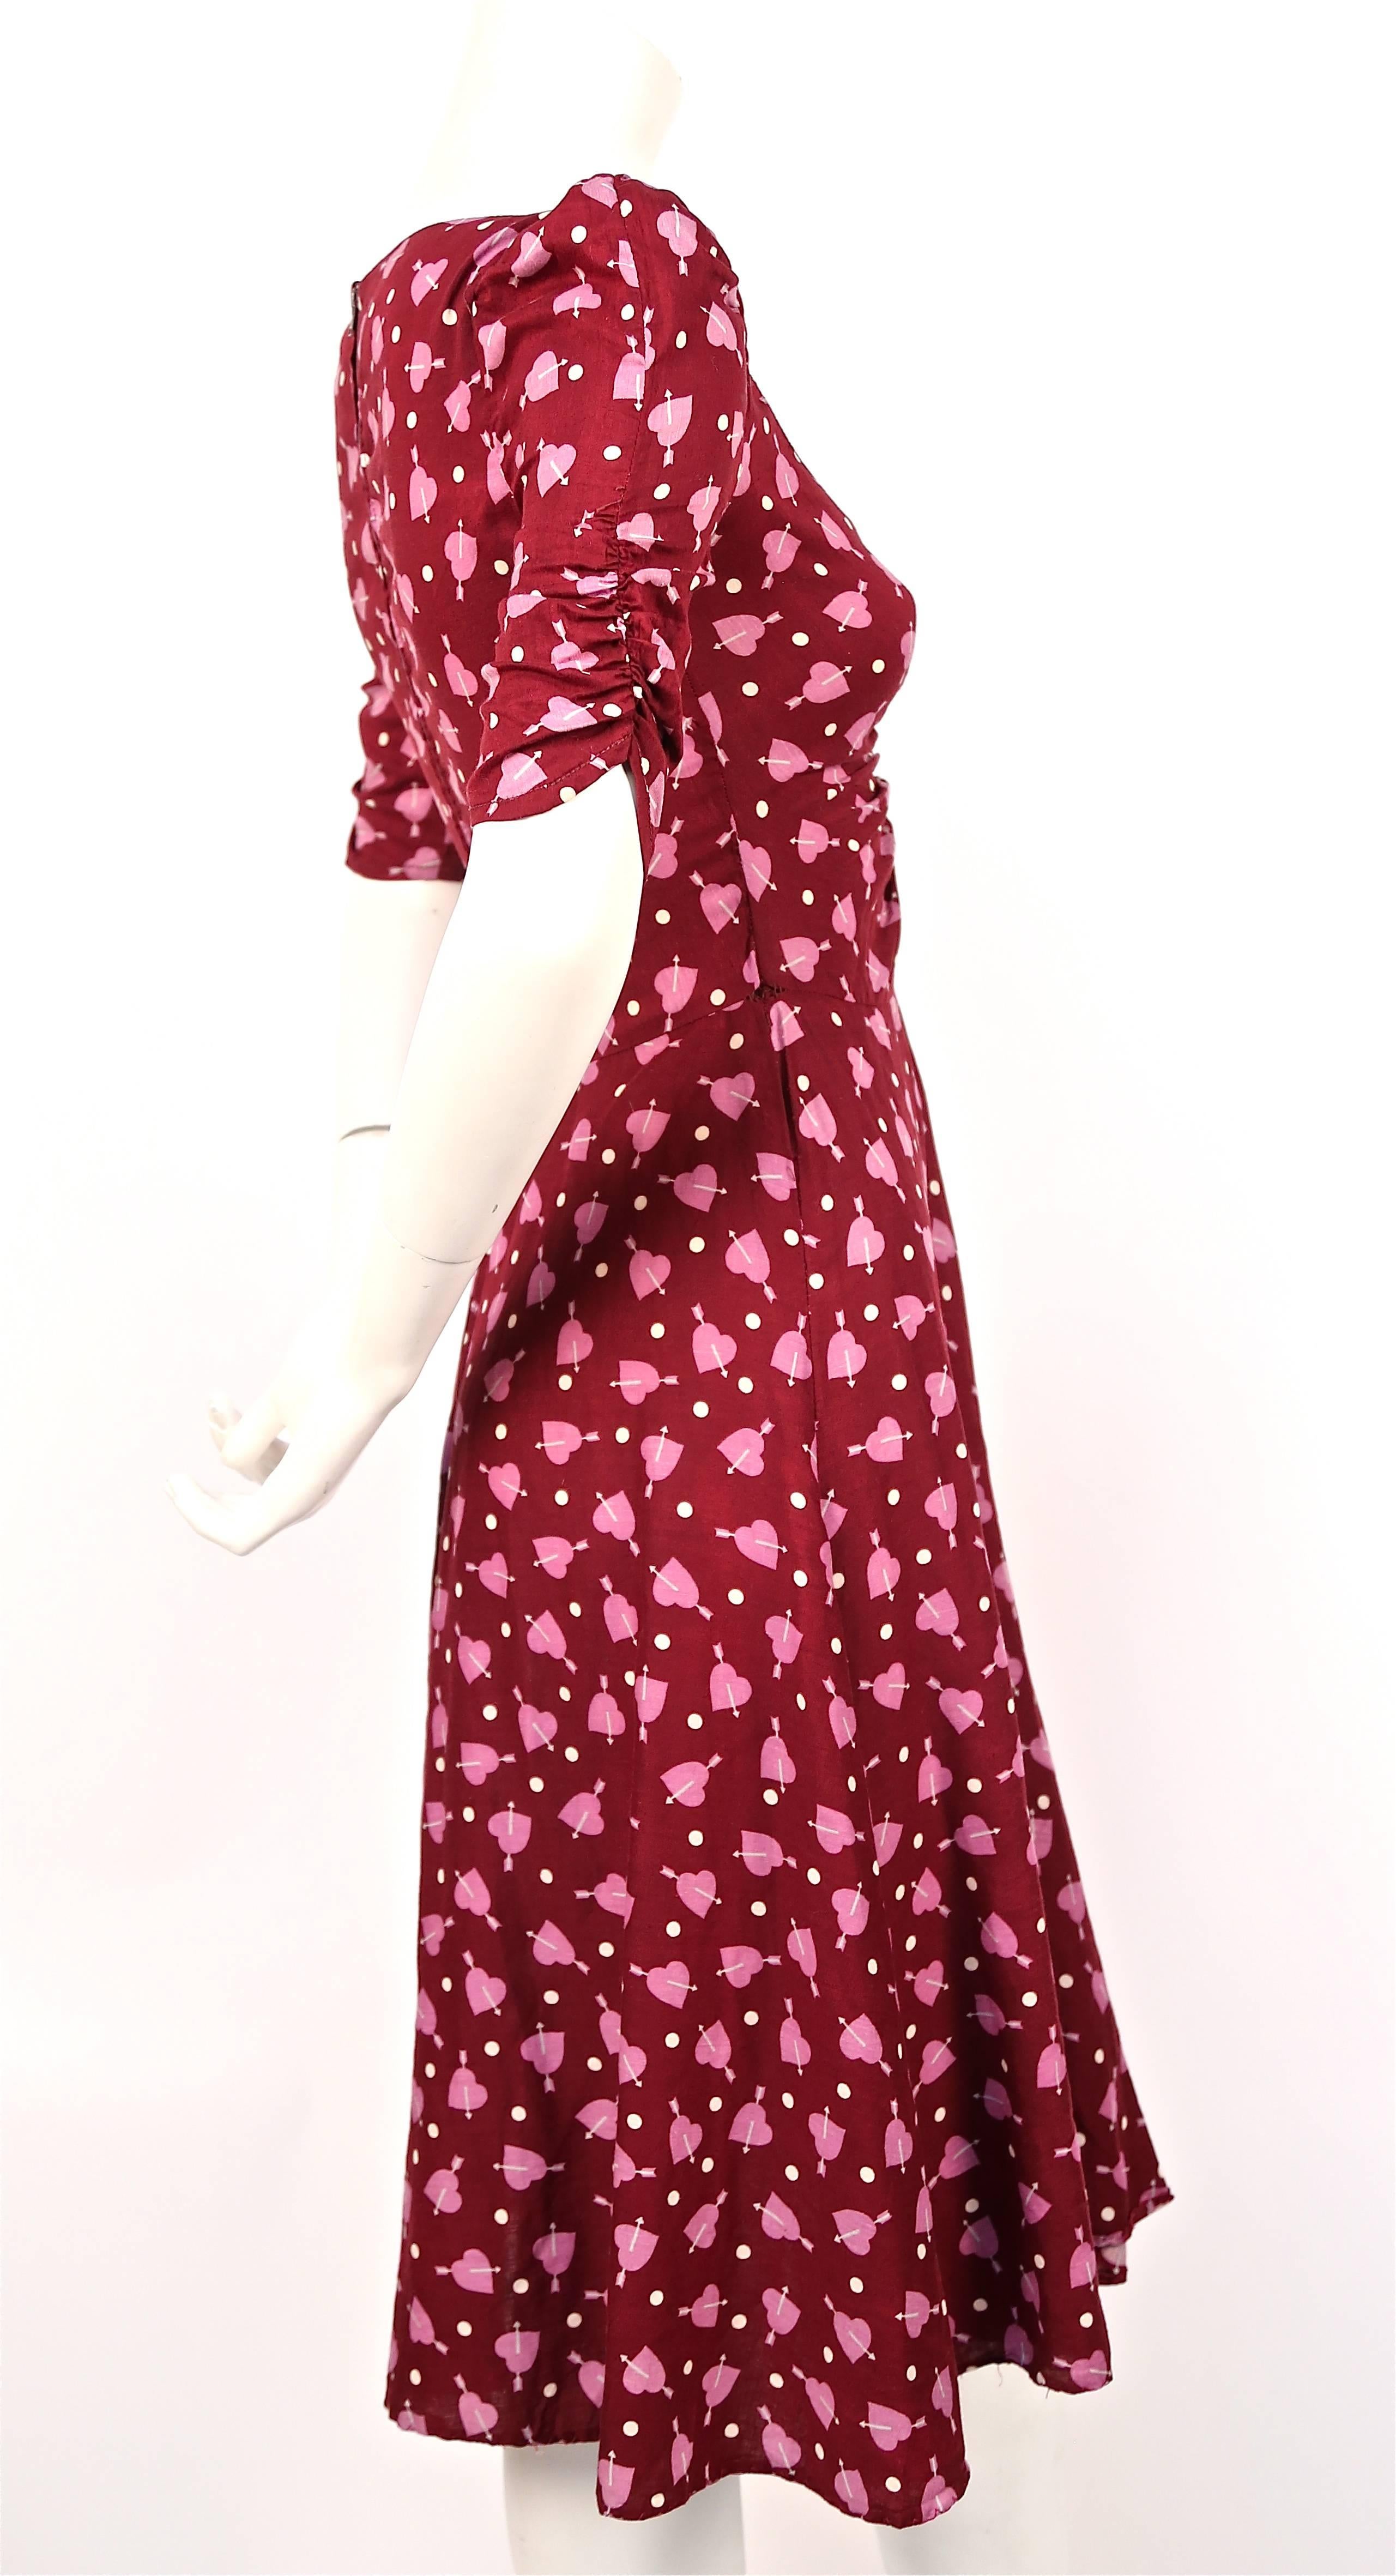 Red 1970's BIBA heart & arrow printed cotton dress